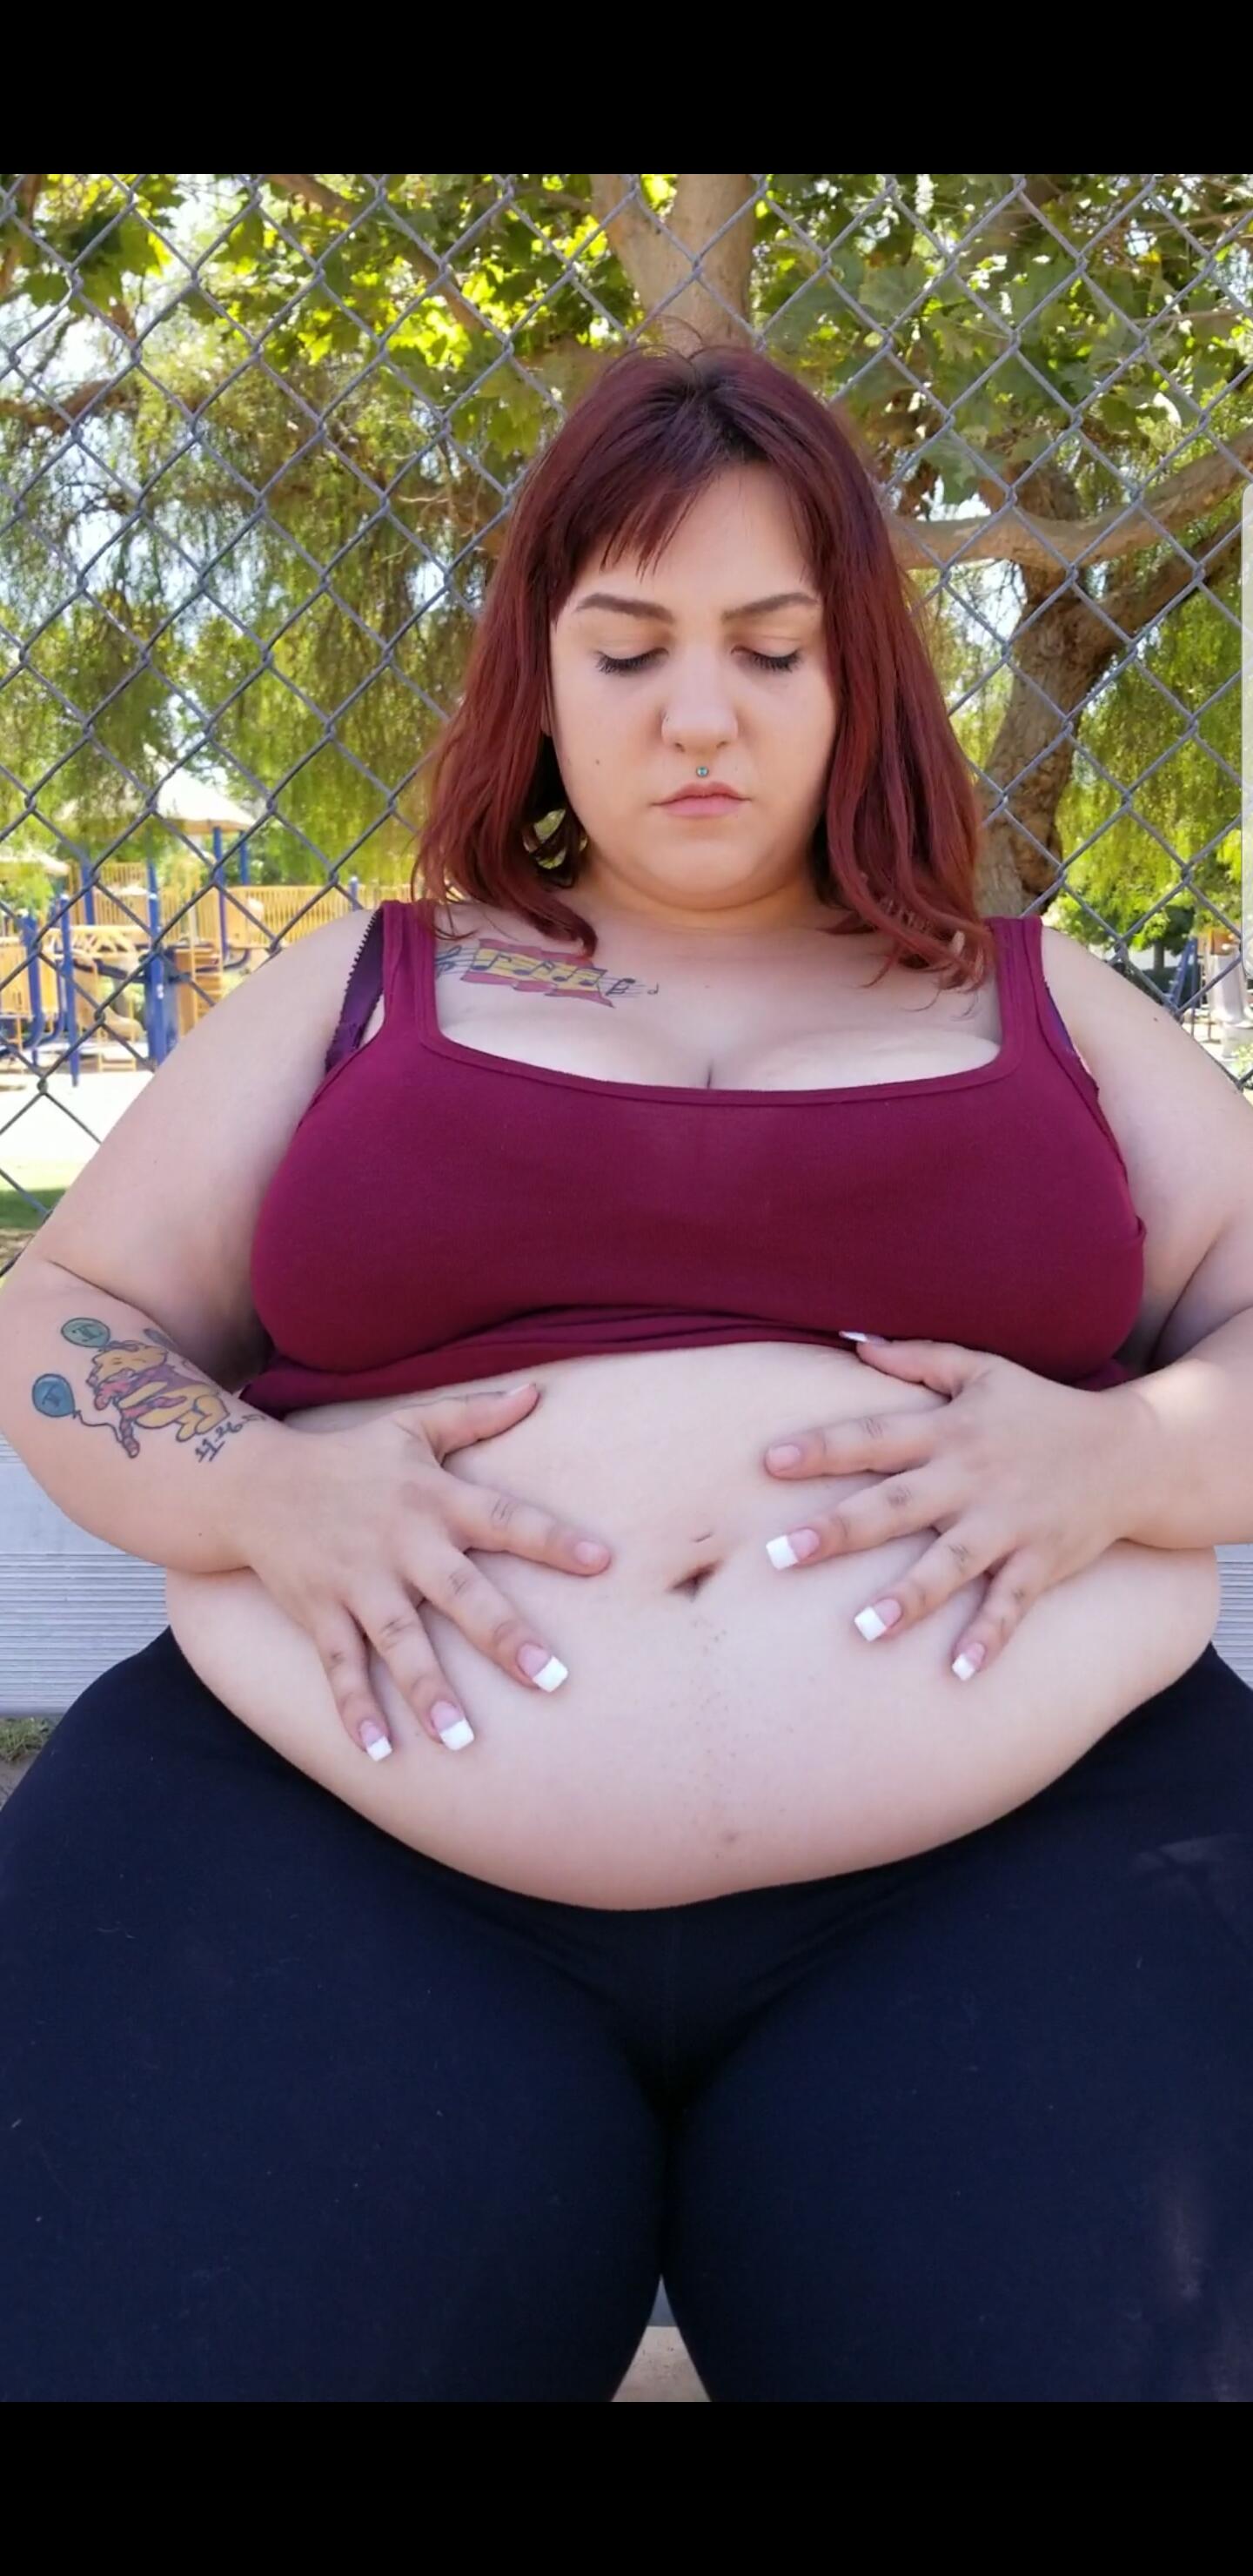 Big Fat Tummy - Fat Chubby Bbw Belly Play - Best Sex Images, Hot XXX Photos and Free Porn  Pics on www.xxxsearch.net